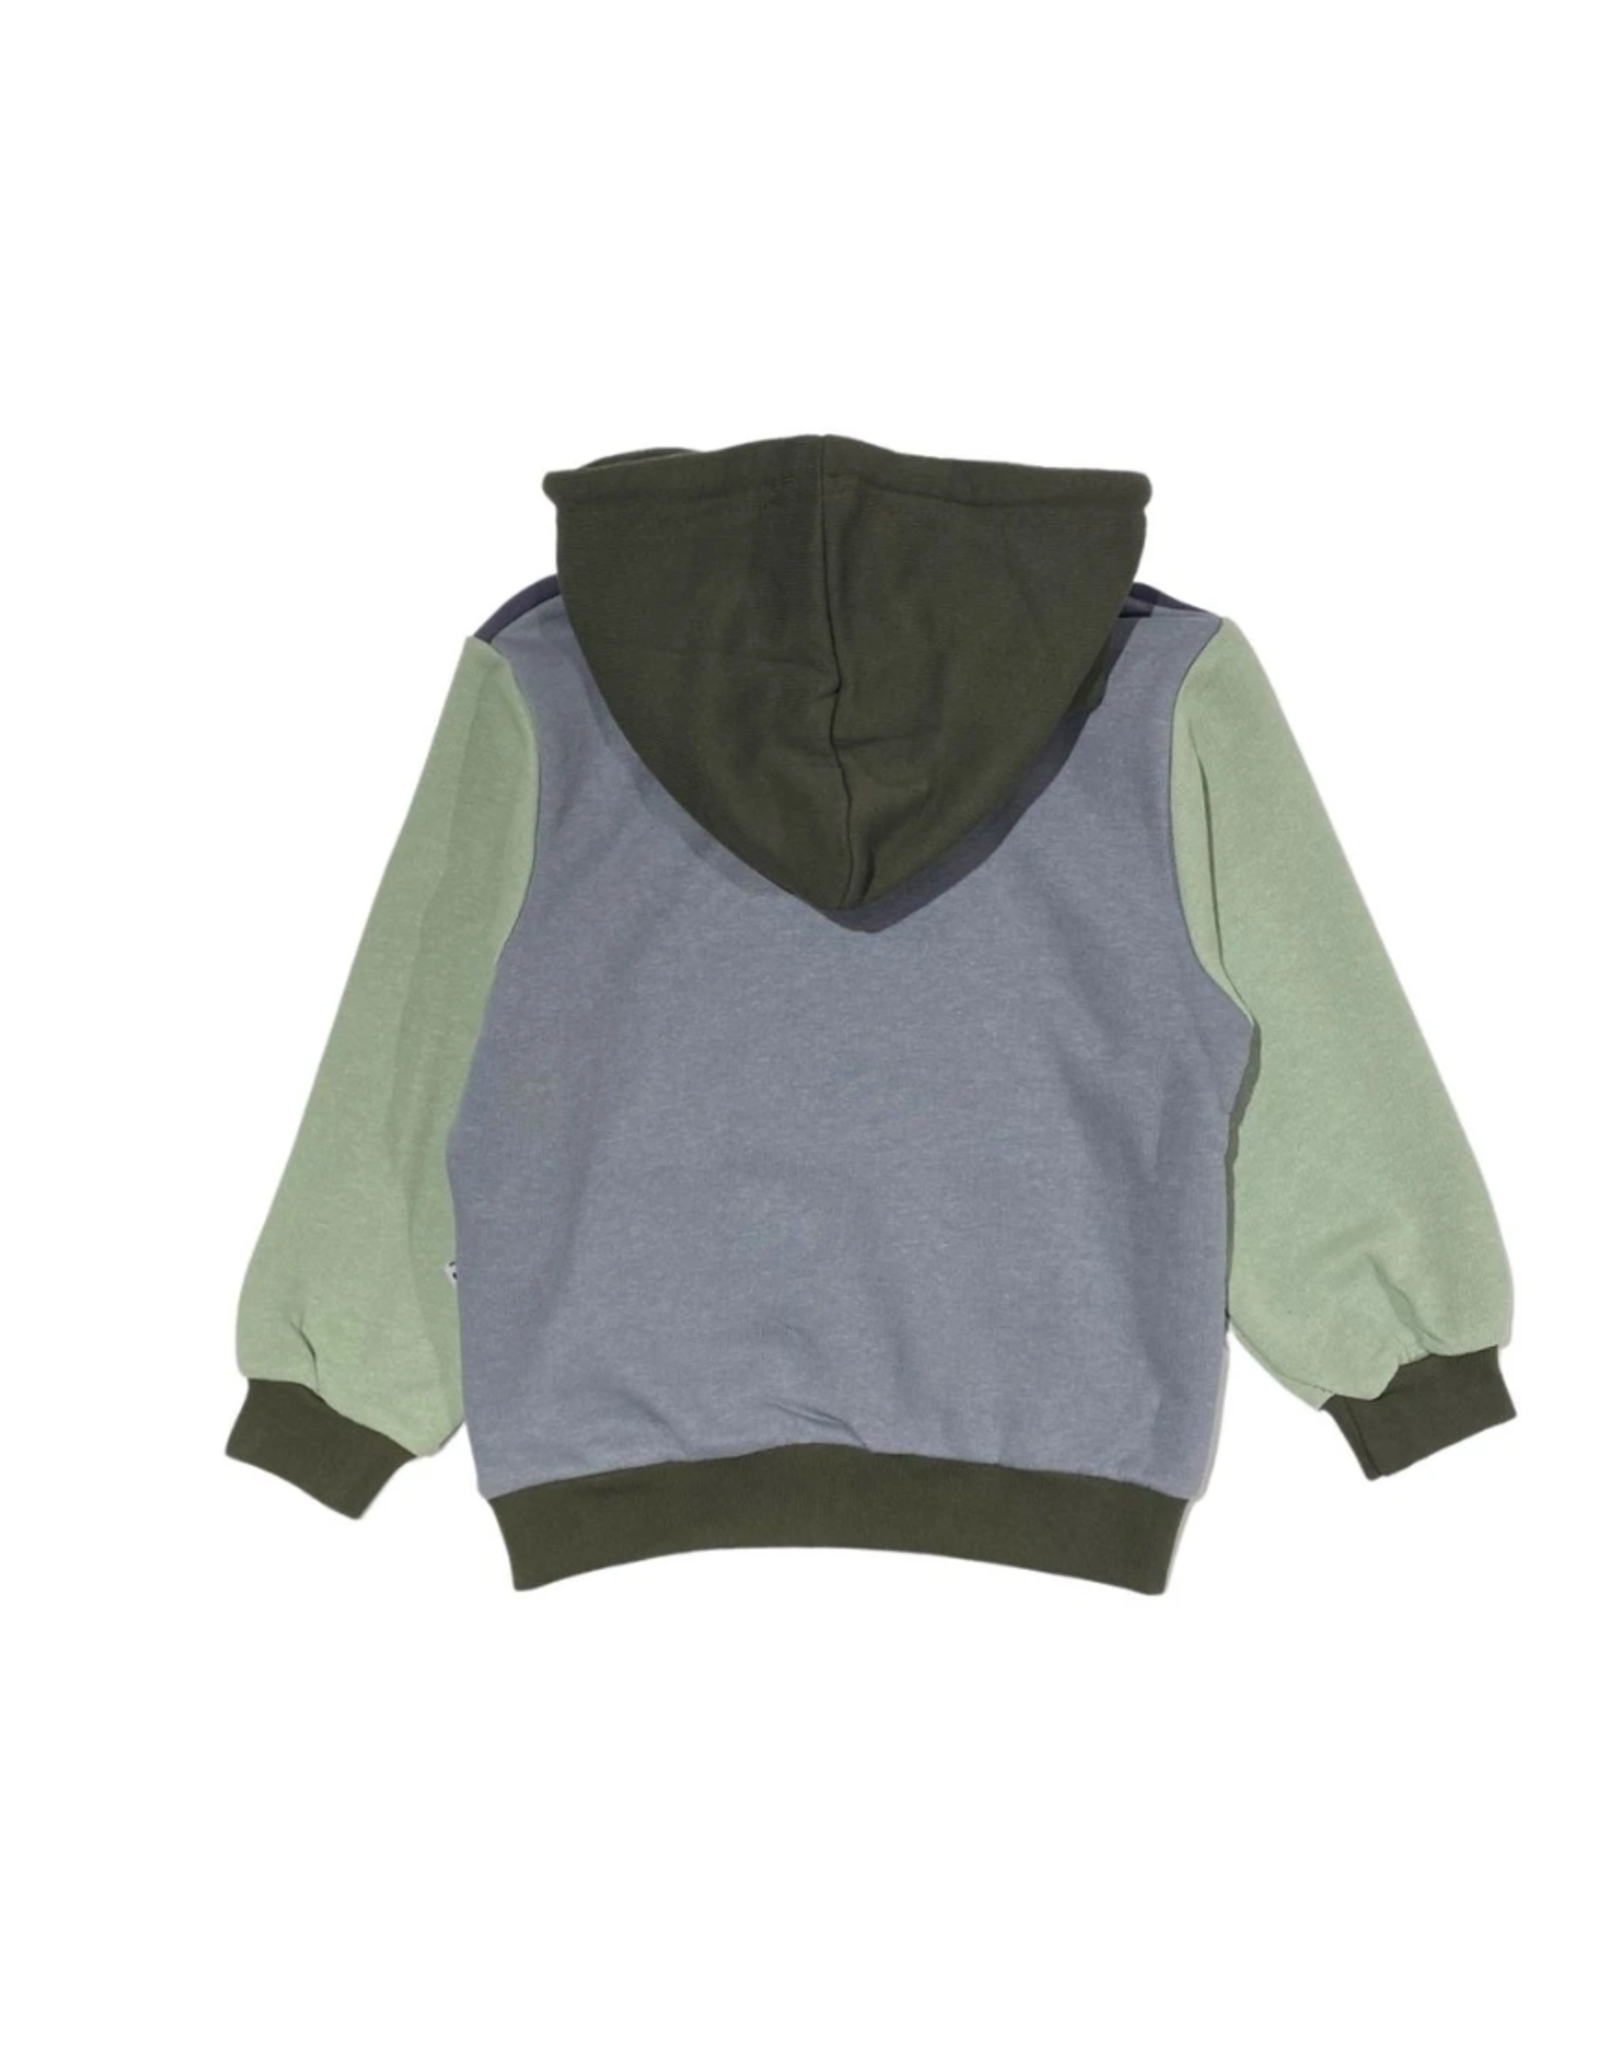 COS I SAID SO Color block hoodie - odyssey gray